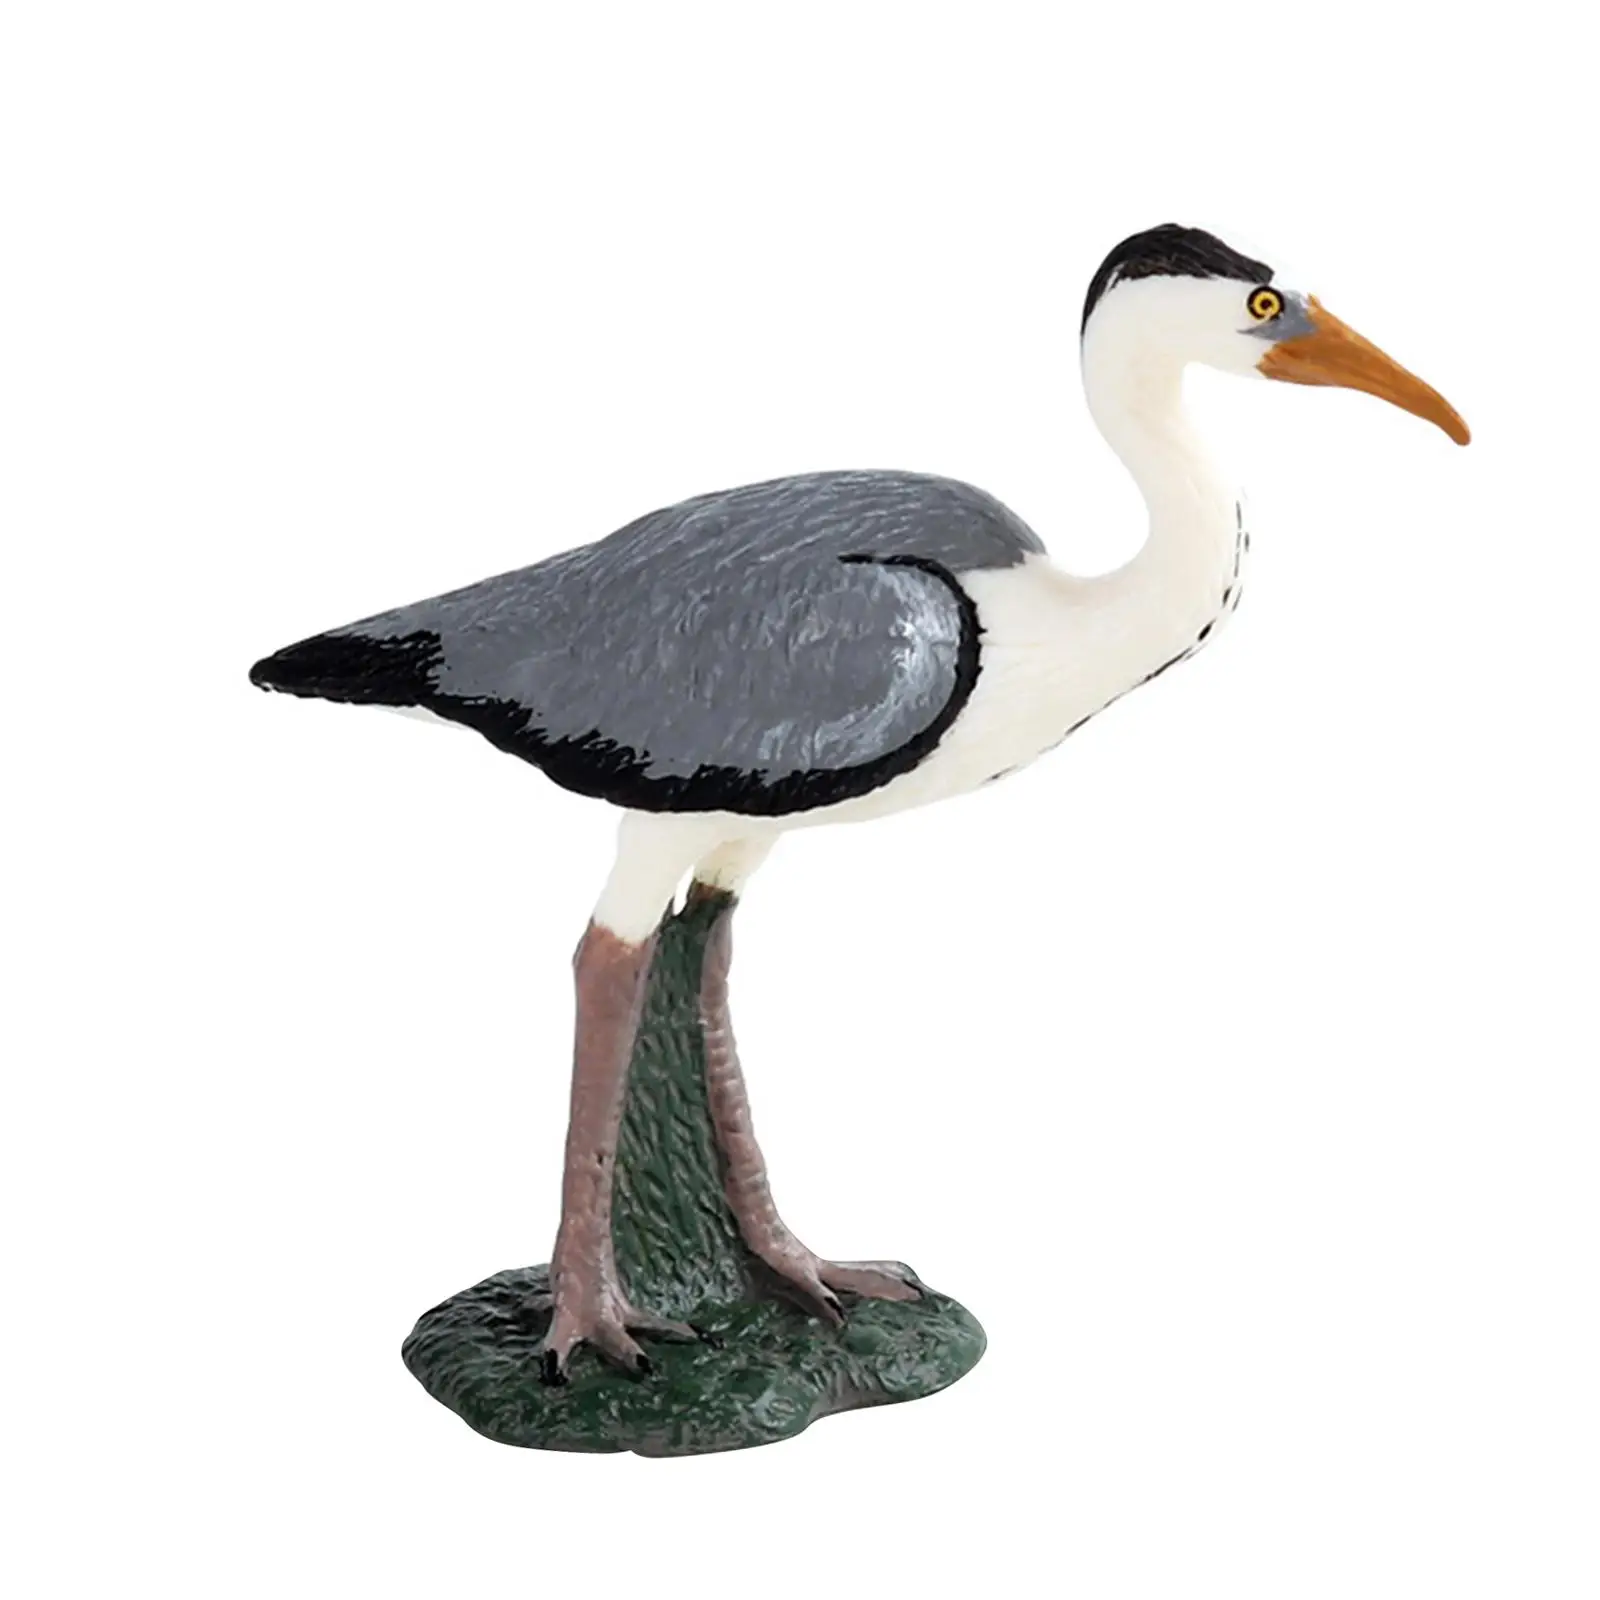 Simulation Bird Statue Bird Figurines Animals Birds Model DIY Crafts Sculpture for Backyard Garden Lawn Home Decoration